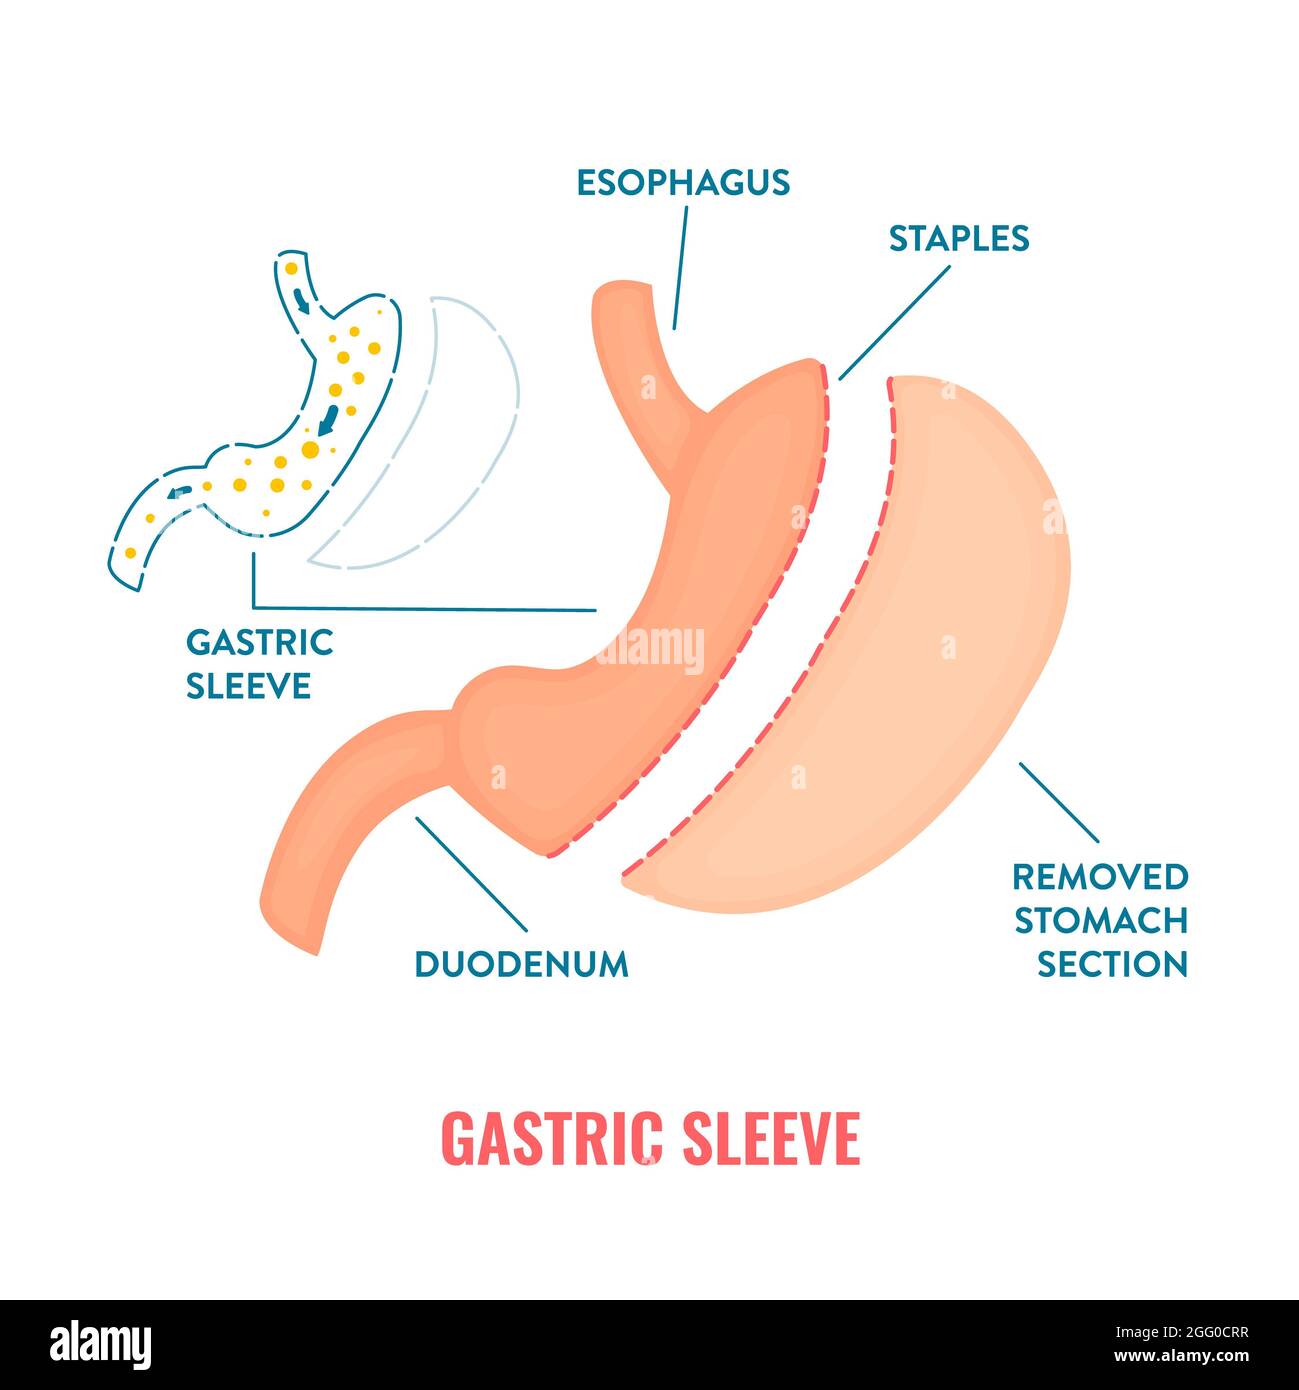 Gastric sleeve bariatric surgery, illustration. Stock Photo